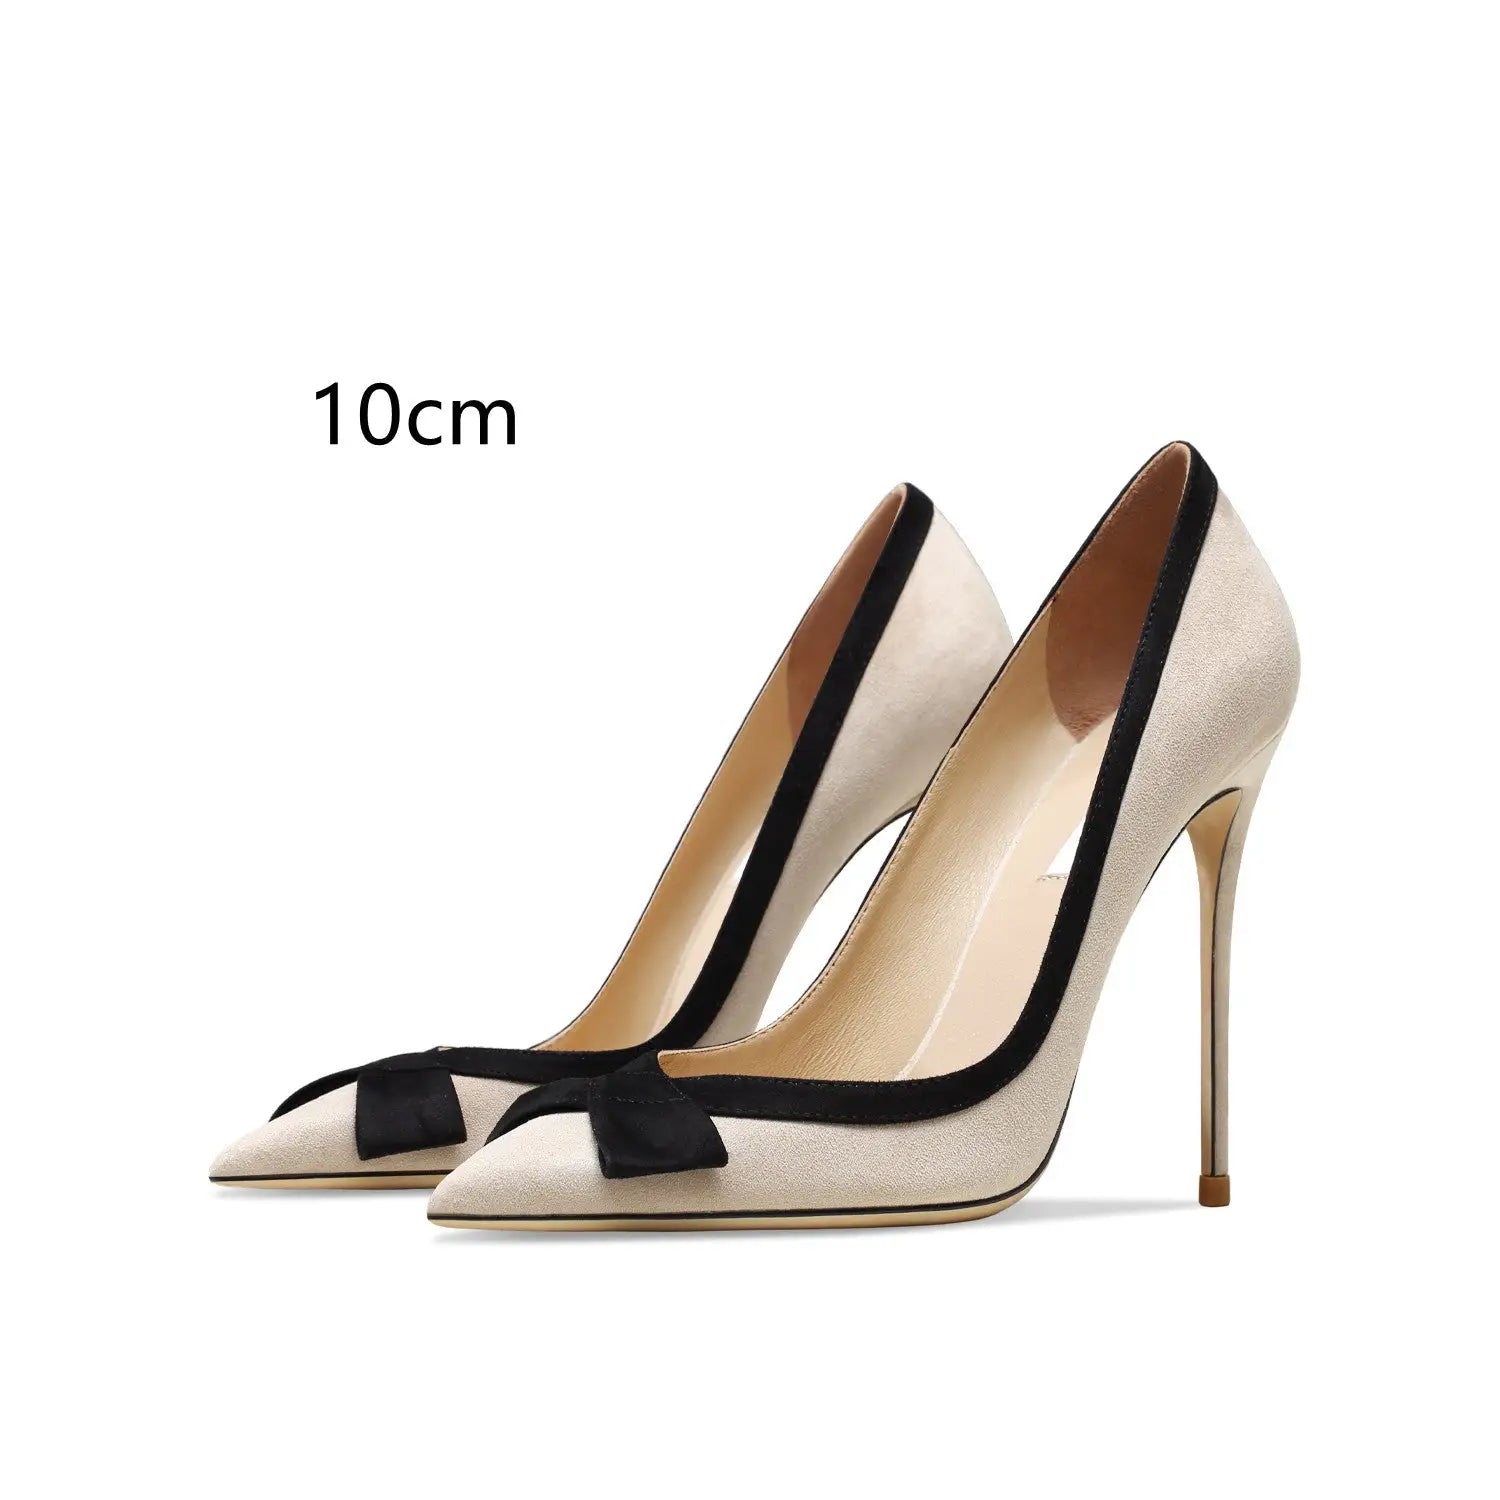 Perfect leather stiletto high heels - apricot / cashmere 10cm / 33 - pumps